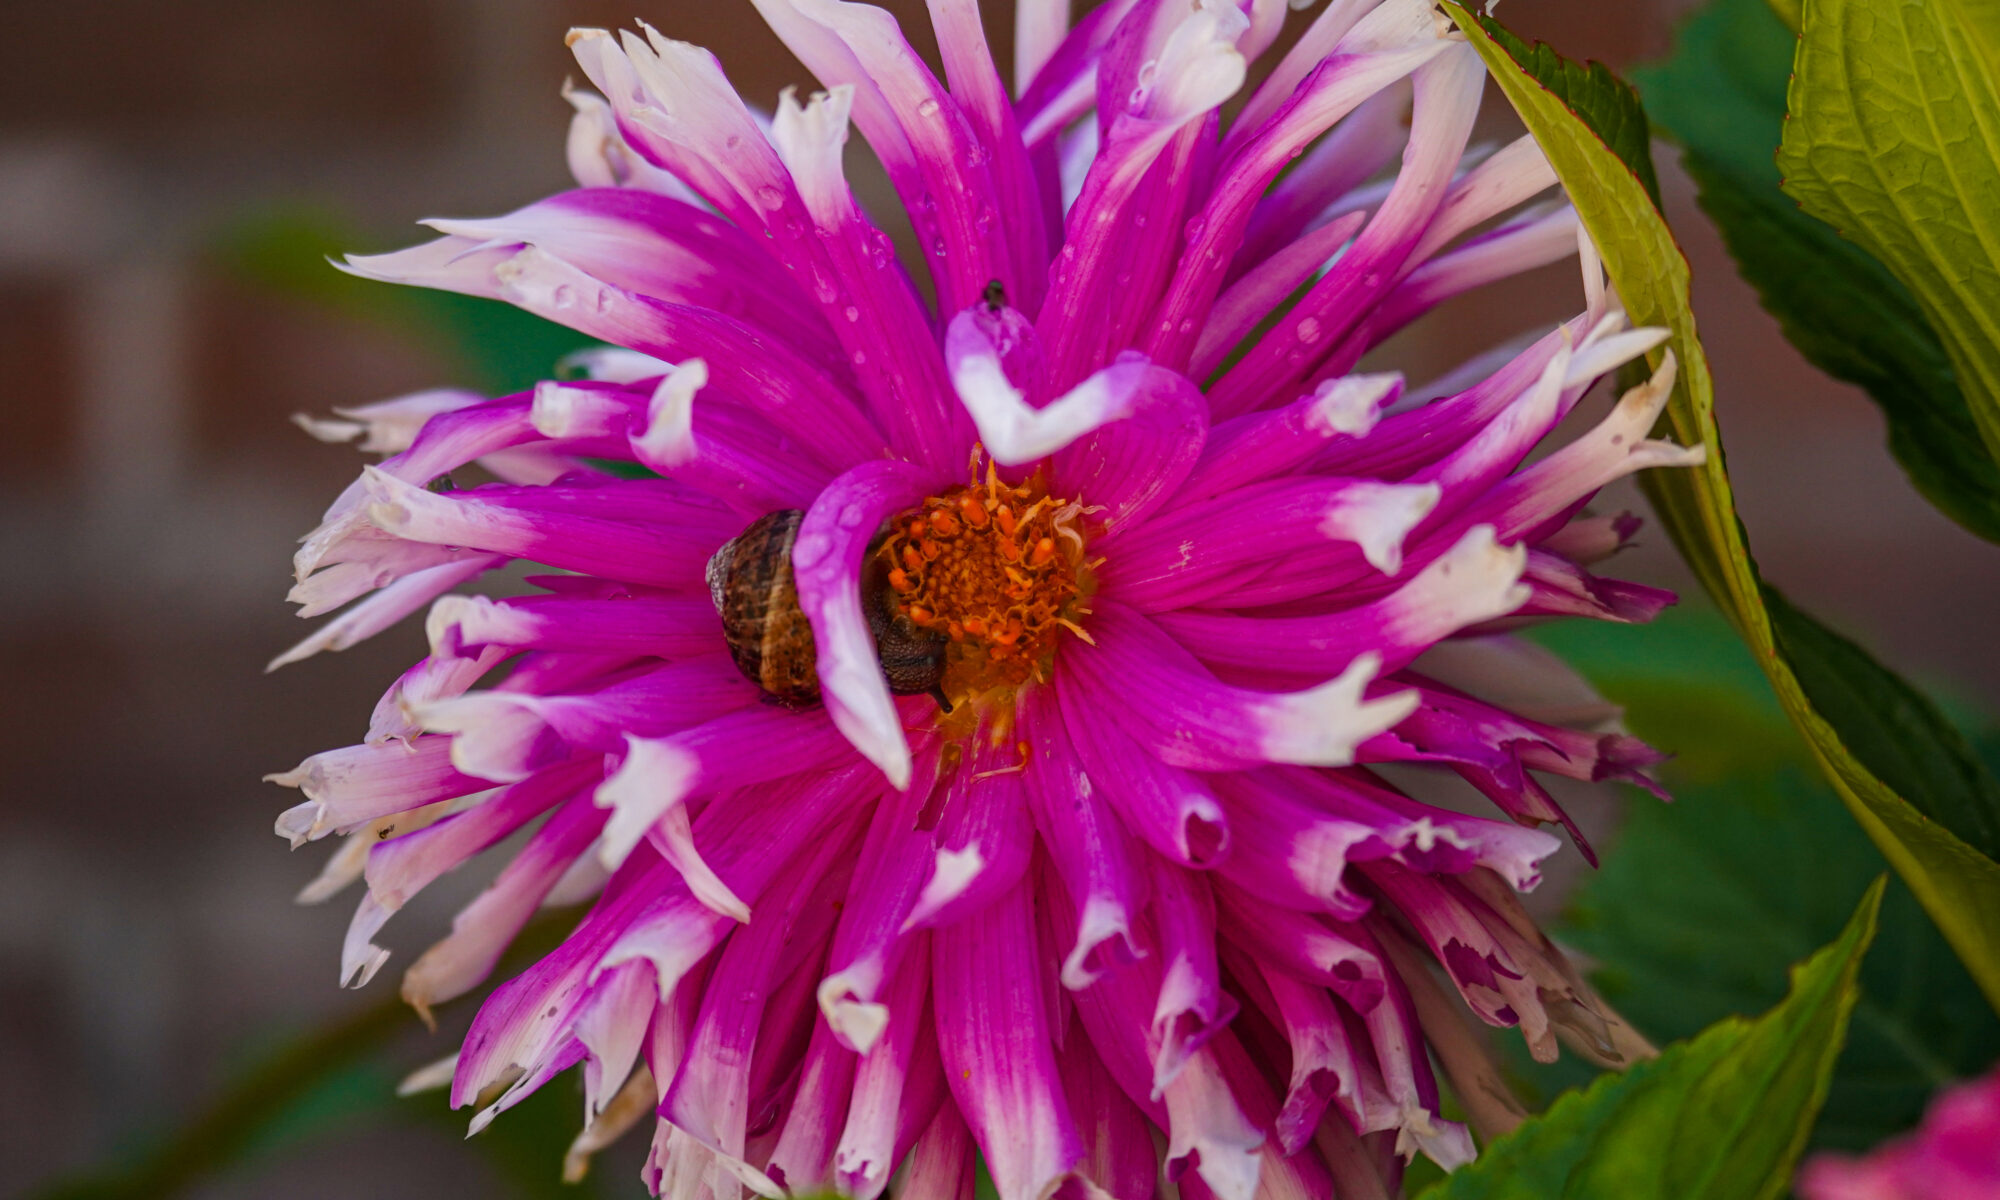 dahlia table dancer fimbriata semi cactus roze wit